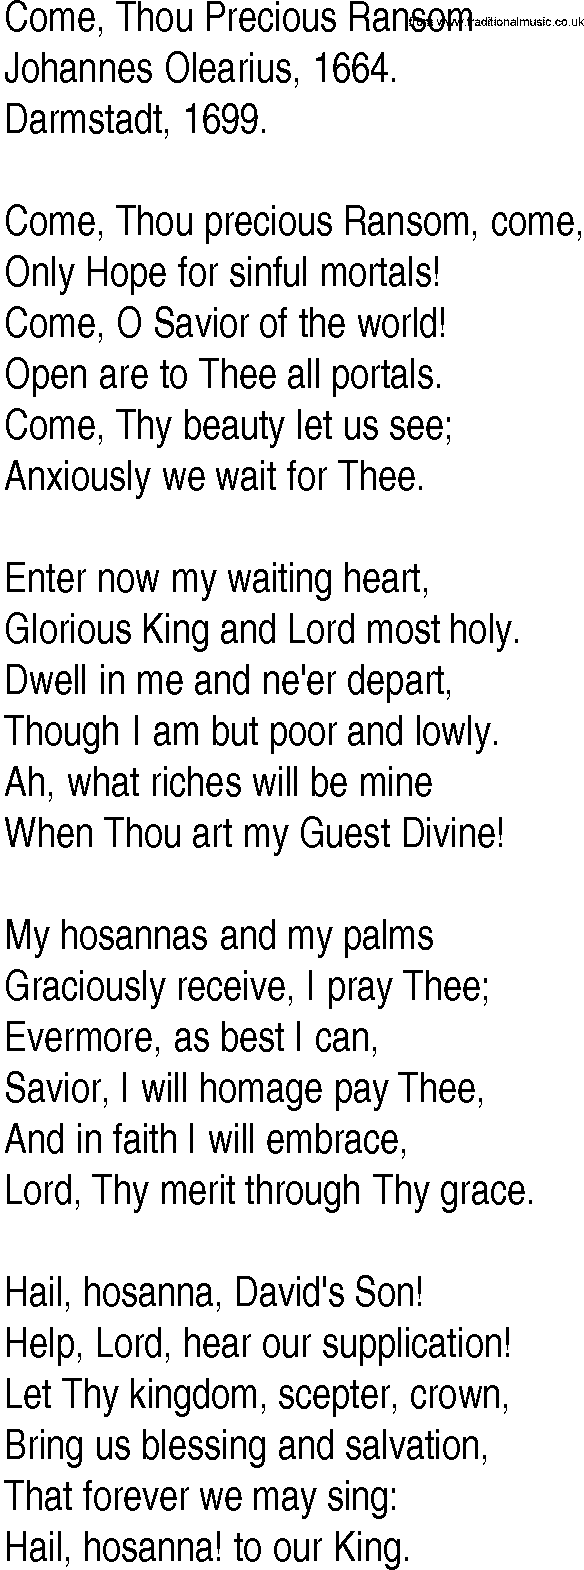 Hymn and Gospel Song: Come, Thou Precious Ransom by Johannes Olearius lyrics